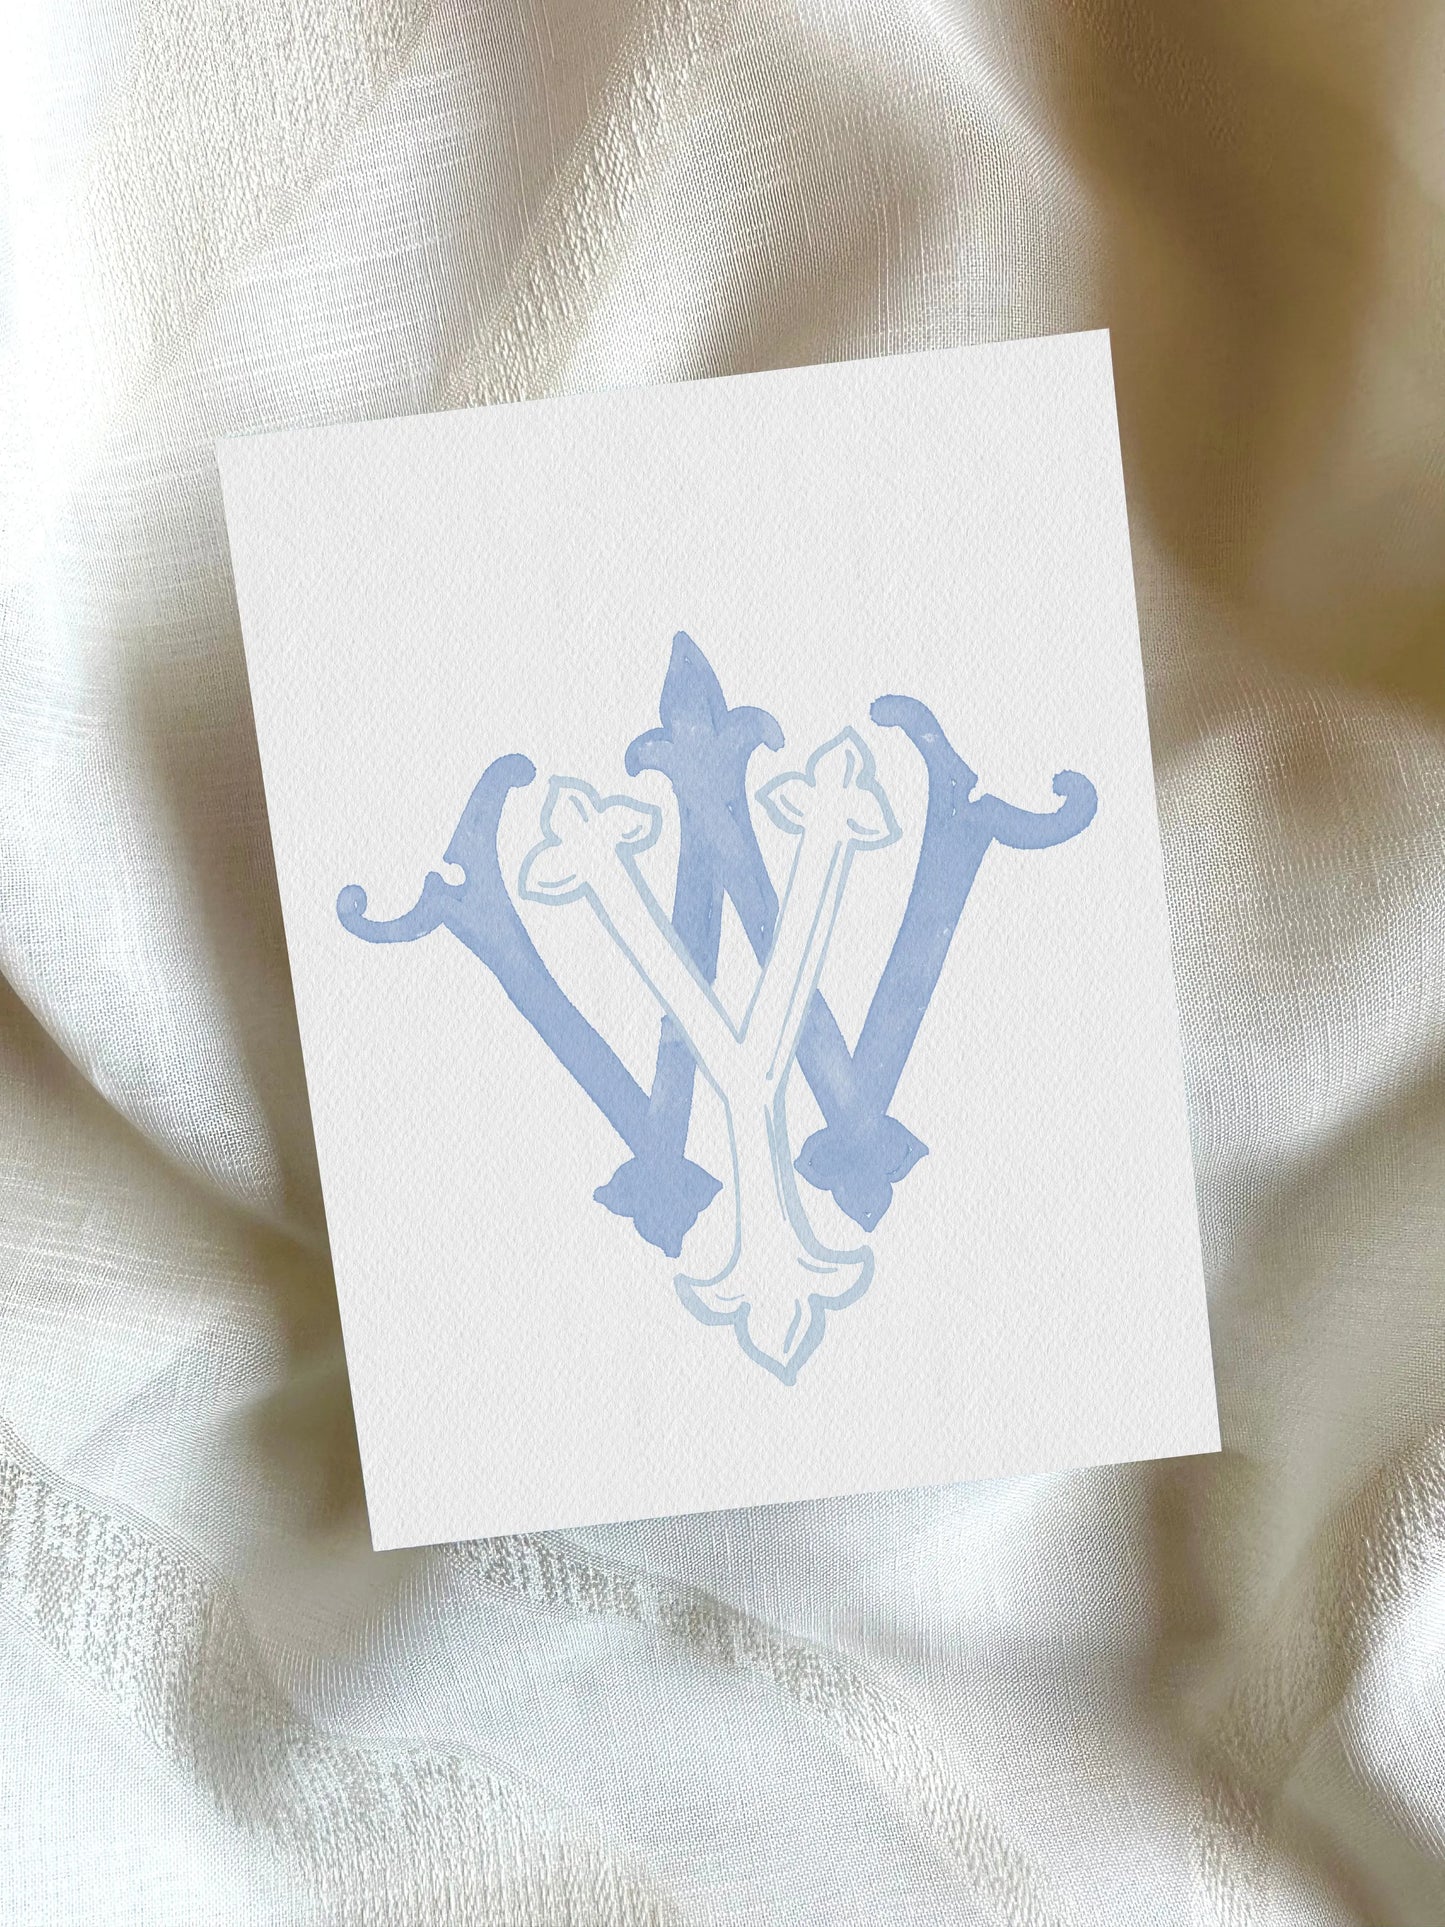 2 Letter Monogram with Letters WY | Digital Download - Wedding Monogram SVG, Personal Logo, Wedding Logo for Wedding Invitations The Wedding Crest Lab